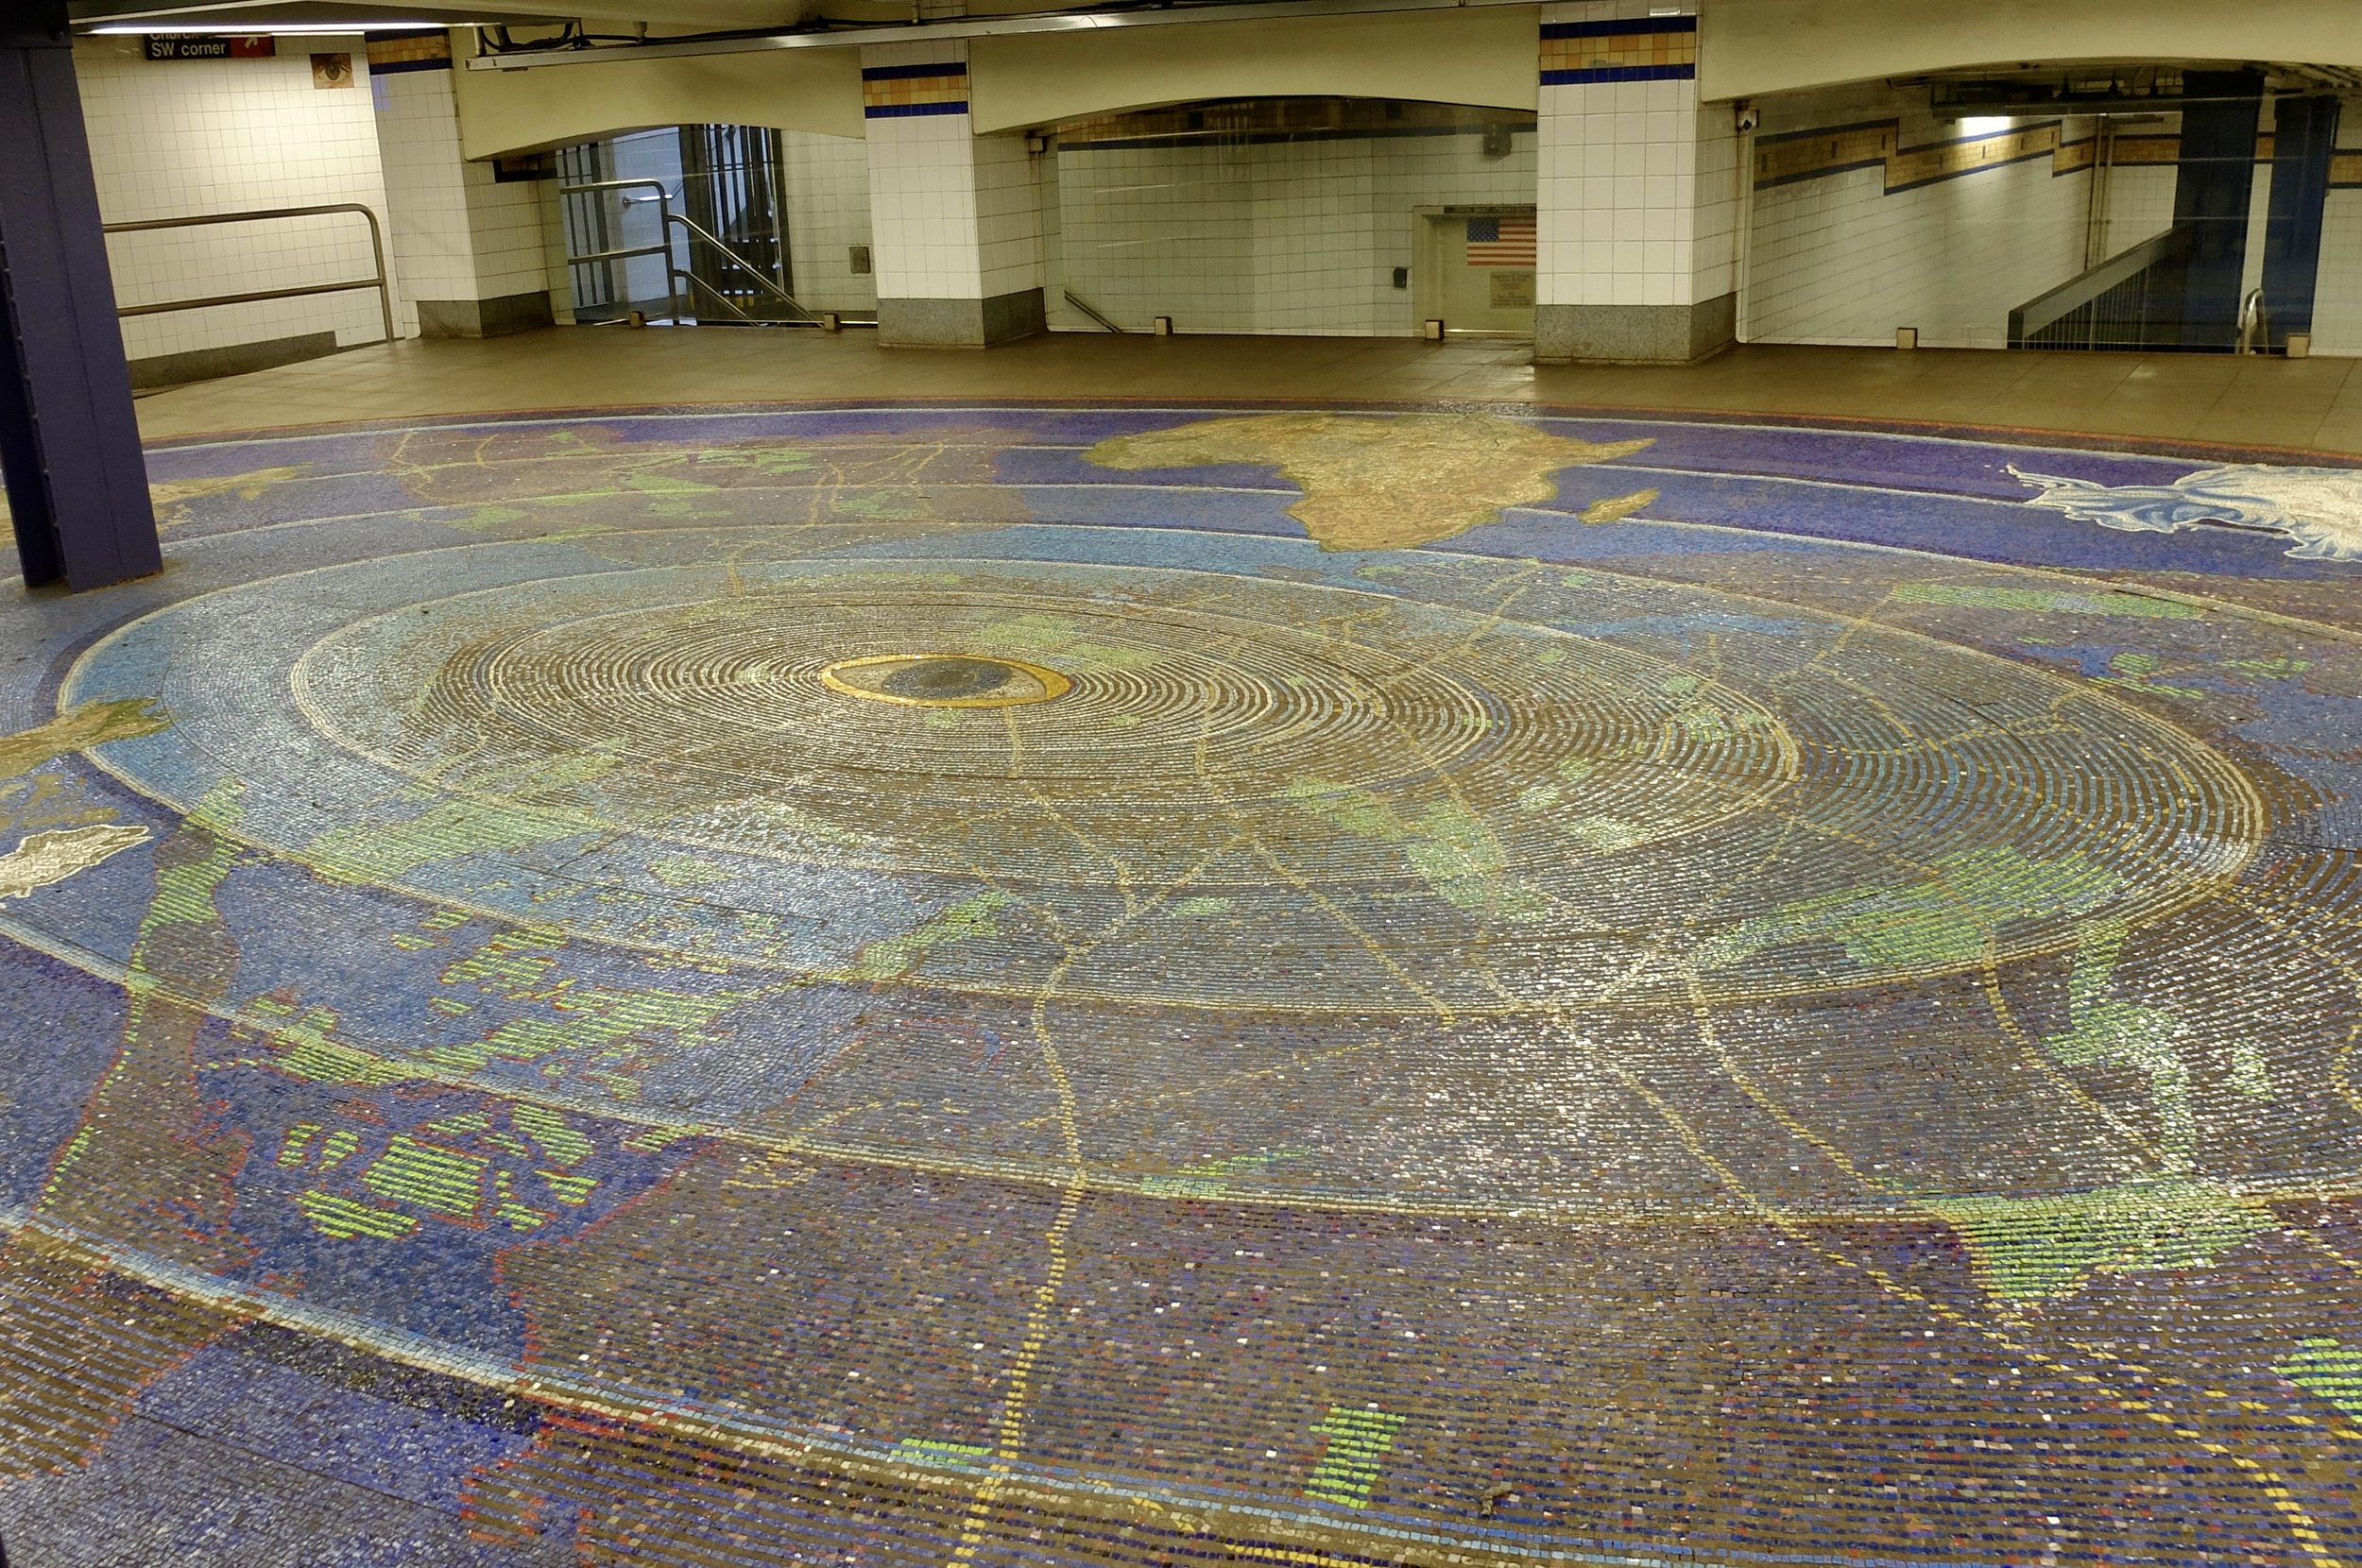  World Trade Center - The Oculus and Transportation Hub   Kristin Jones 1998 Occulua -   Stone &amp; glass mosaic.    